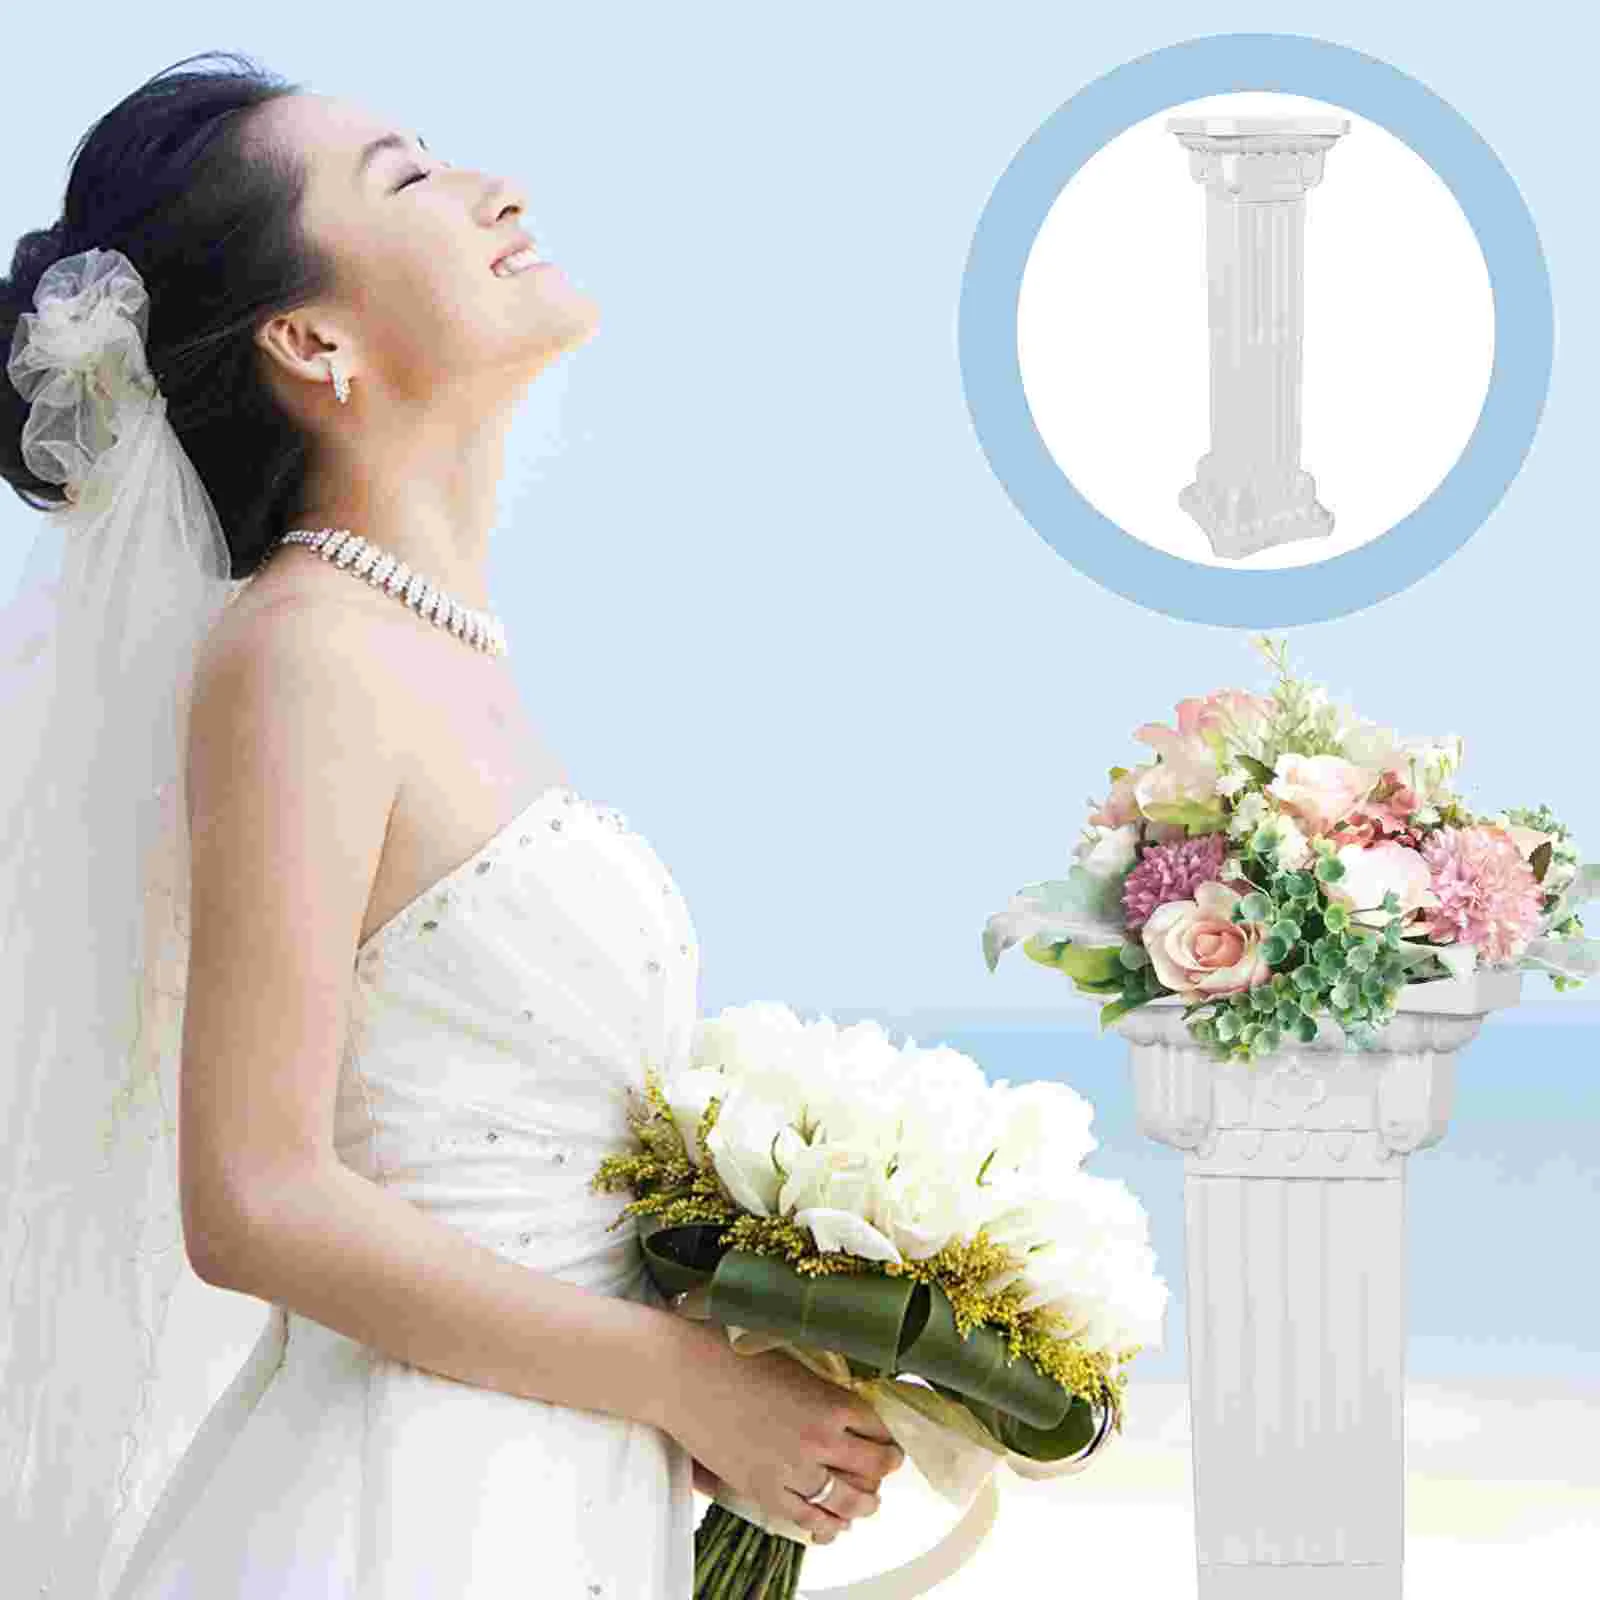 

Props Roman Column Bride Outdoor Wedding Decorations Greek Figurine Plastic Party Supply